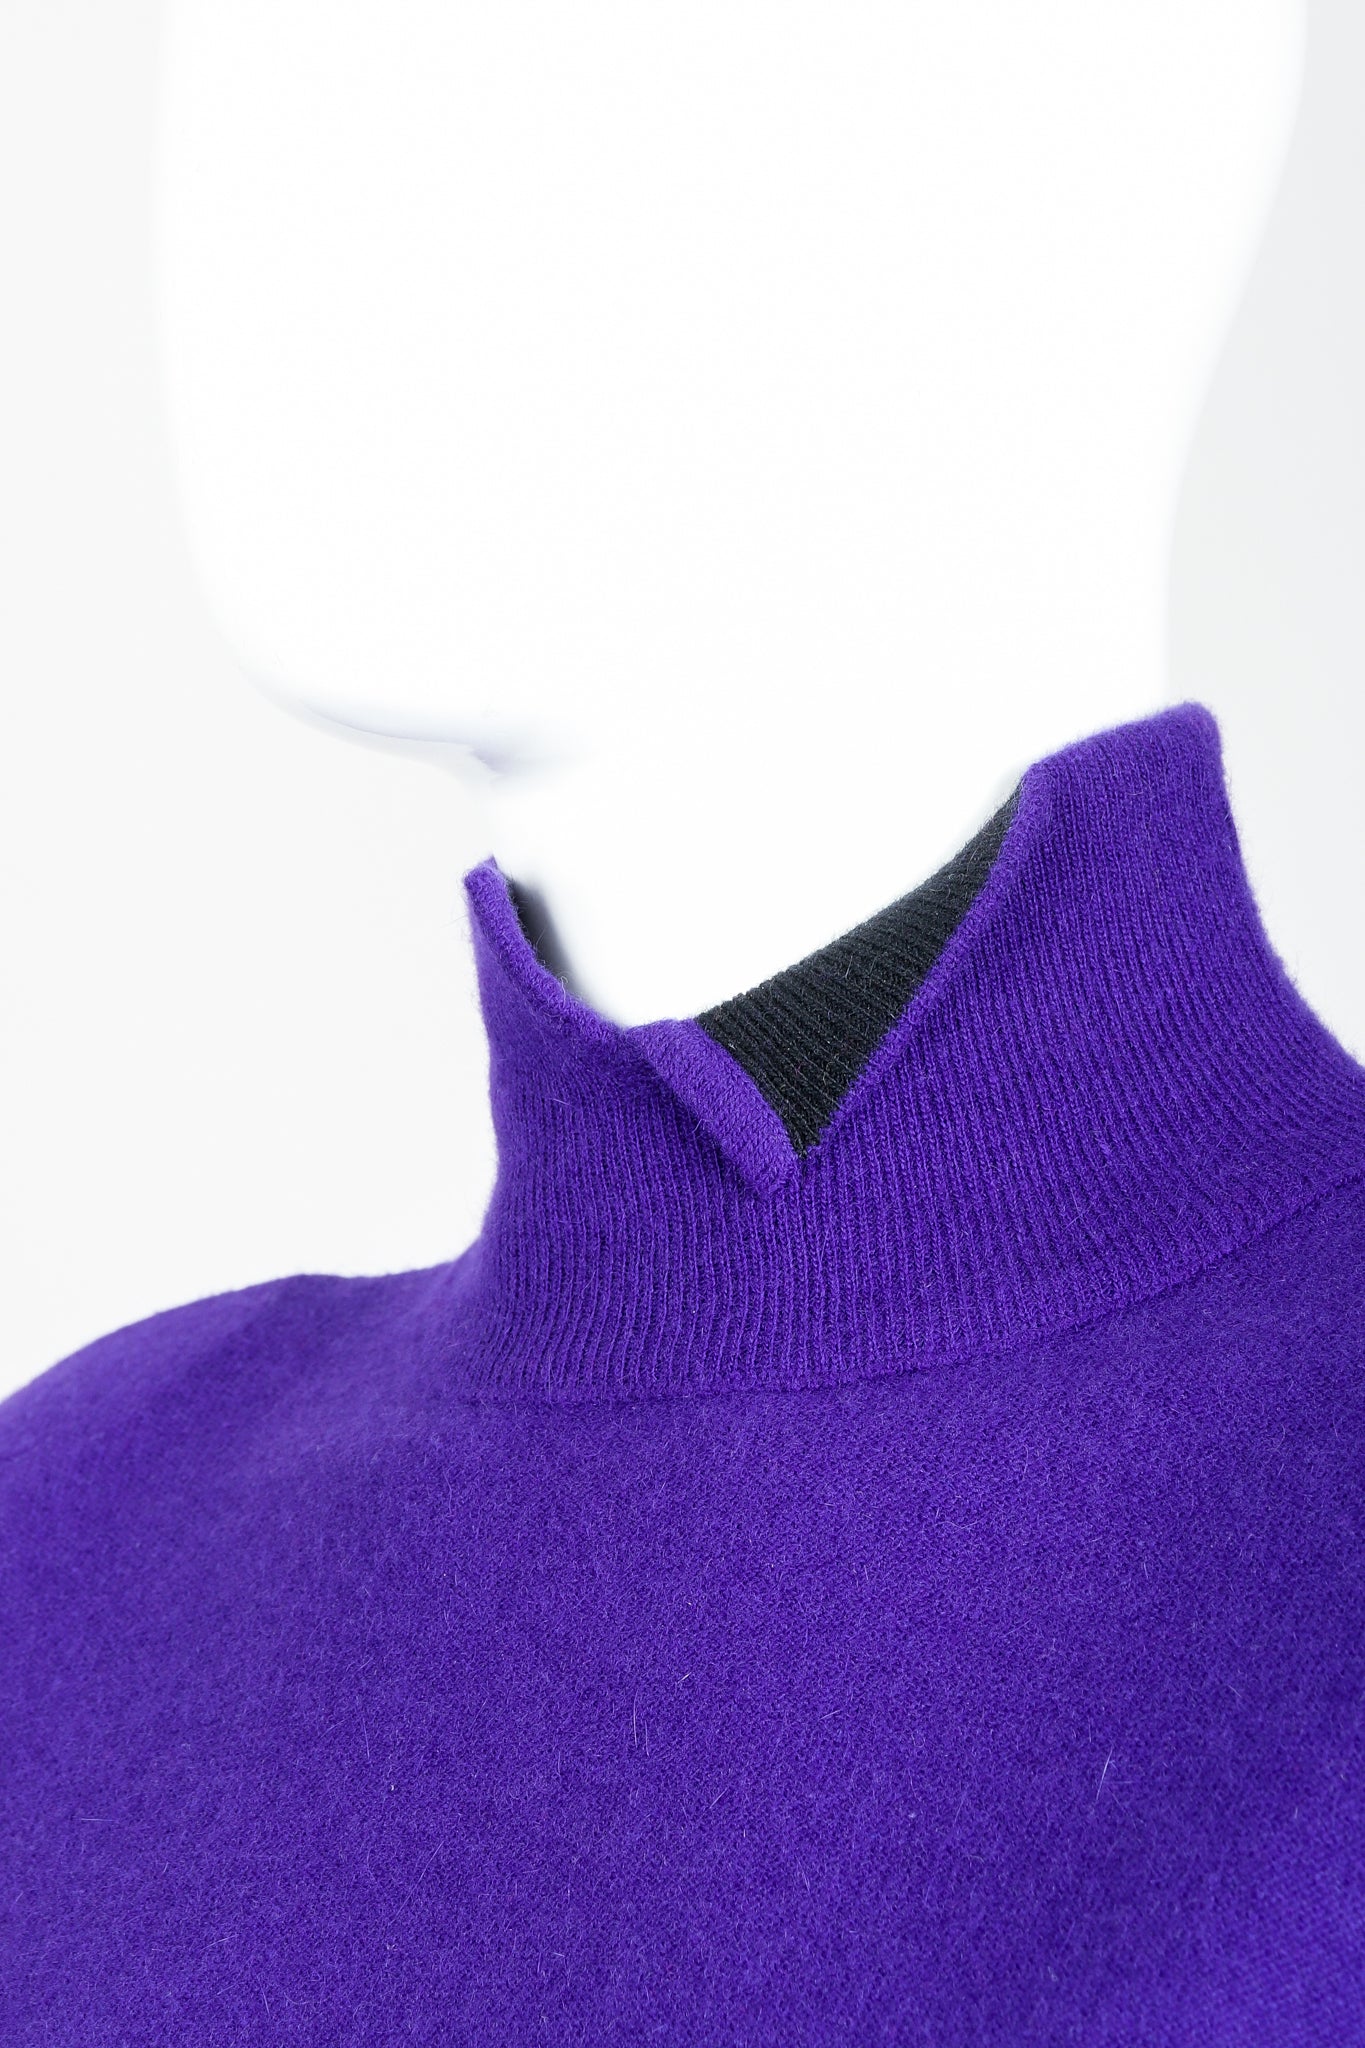 Vintage Sonia Rykiel Purple Knit Turtleneck Sweater on Mannequin Neck Detail at Recess